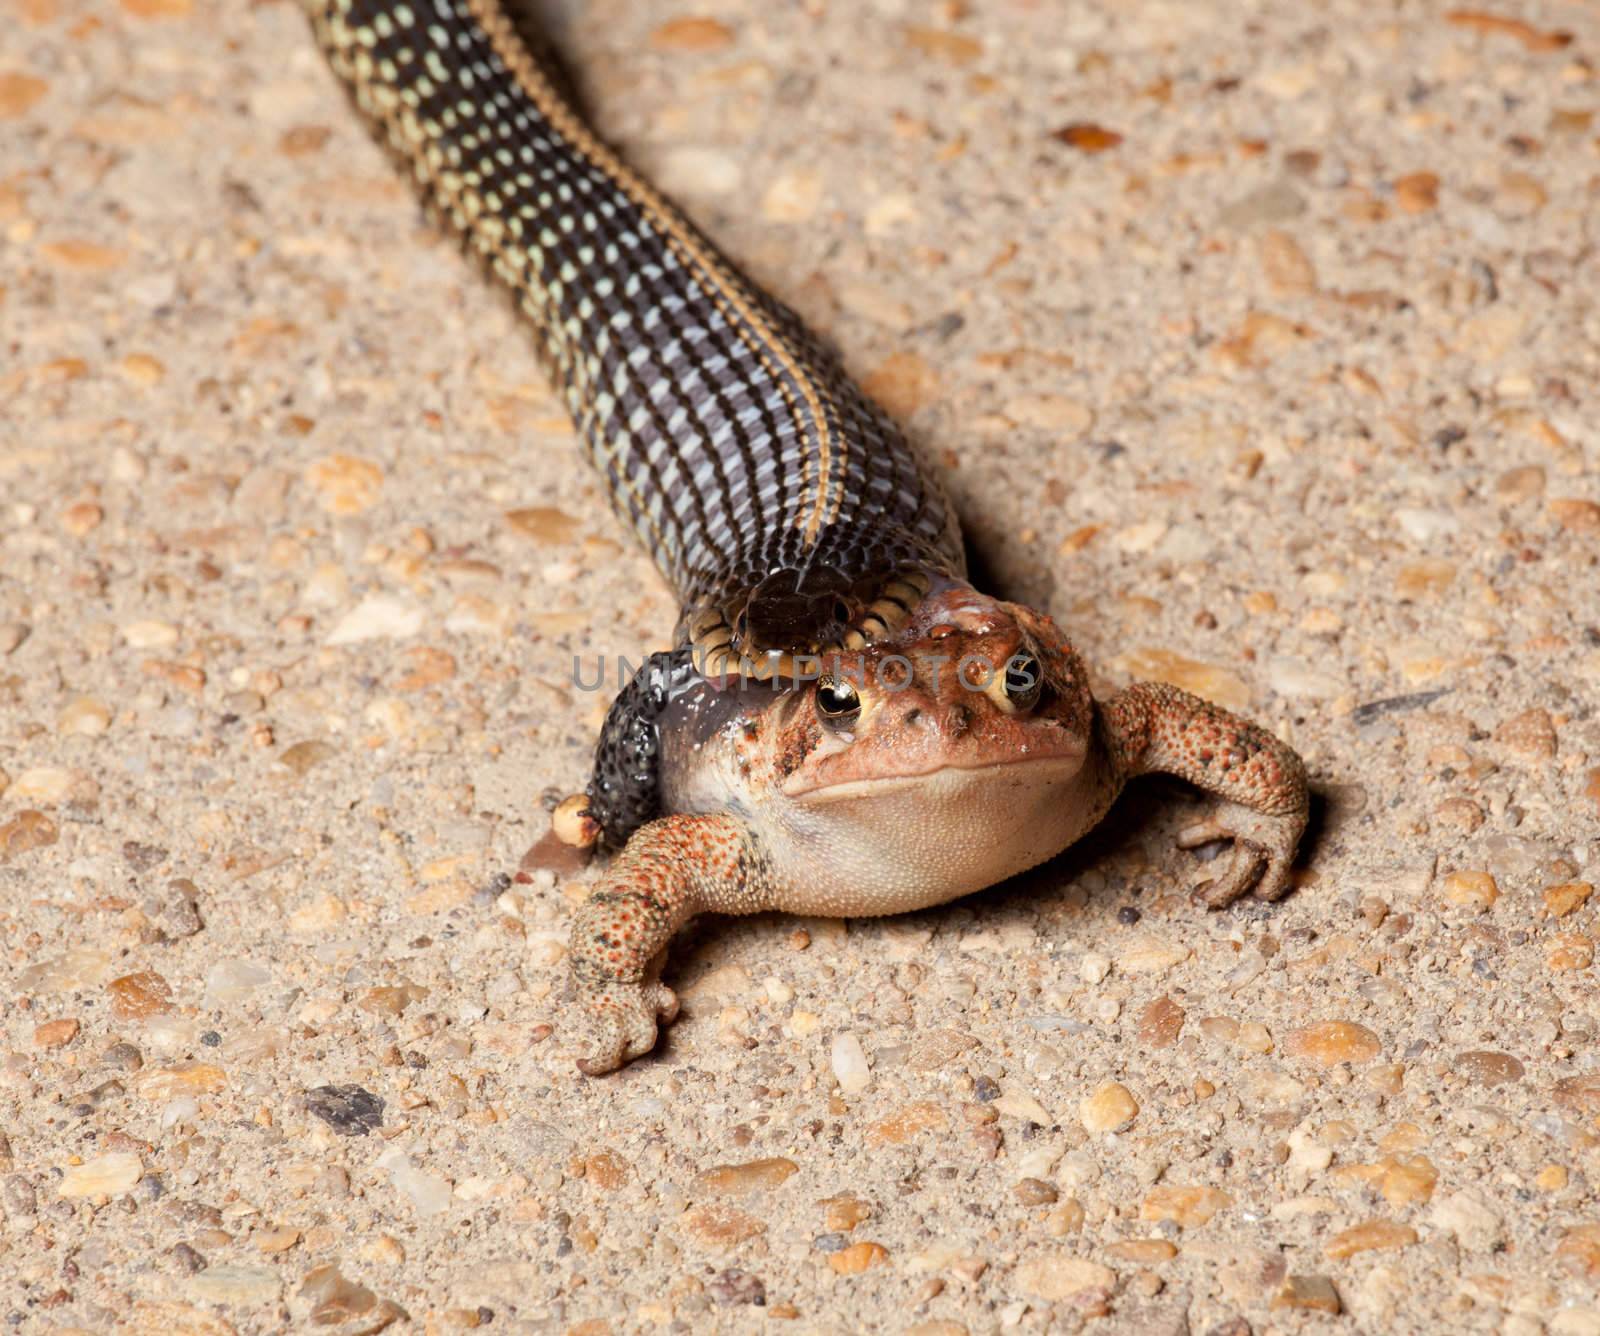 Gartner snake swallowing toad by steheap